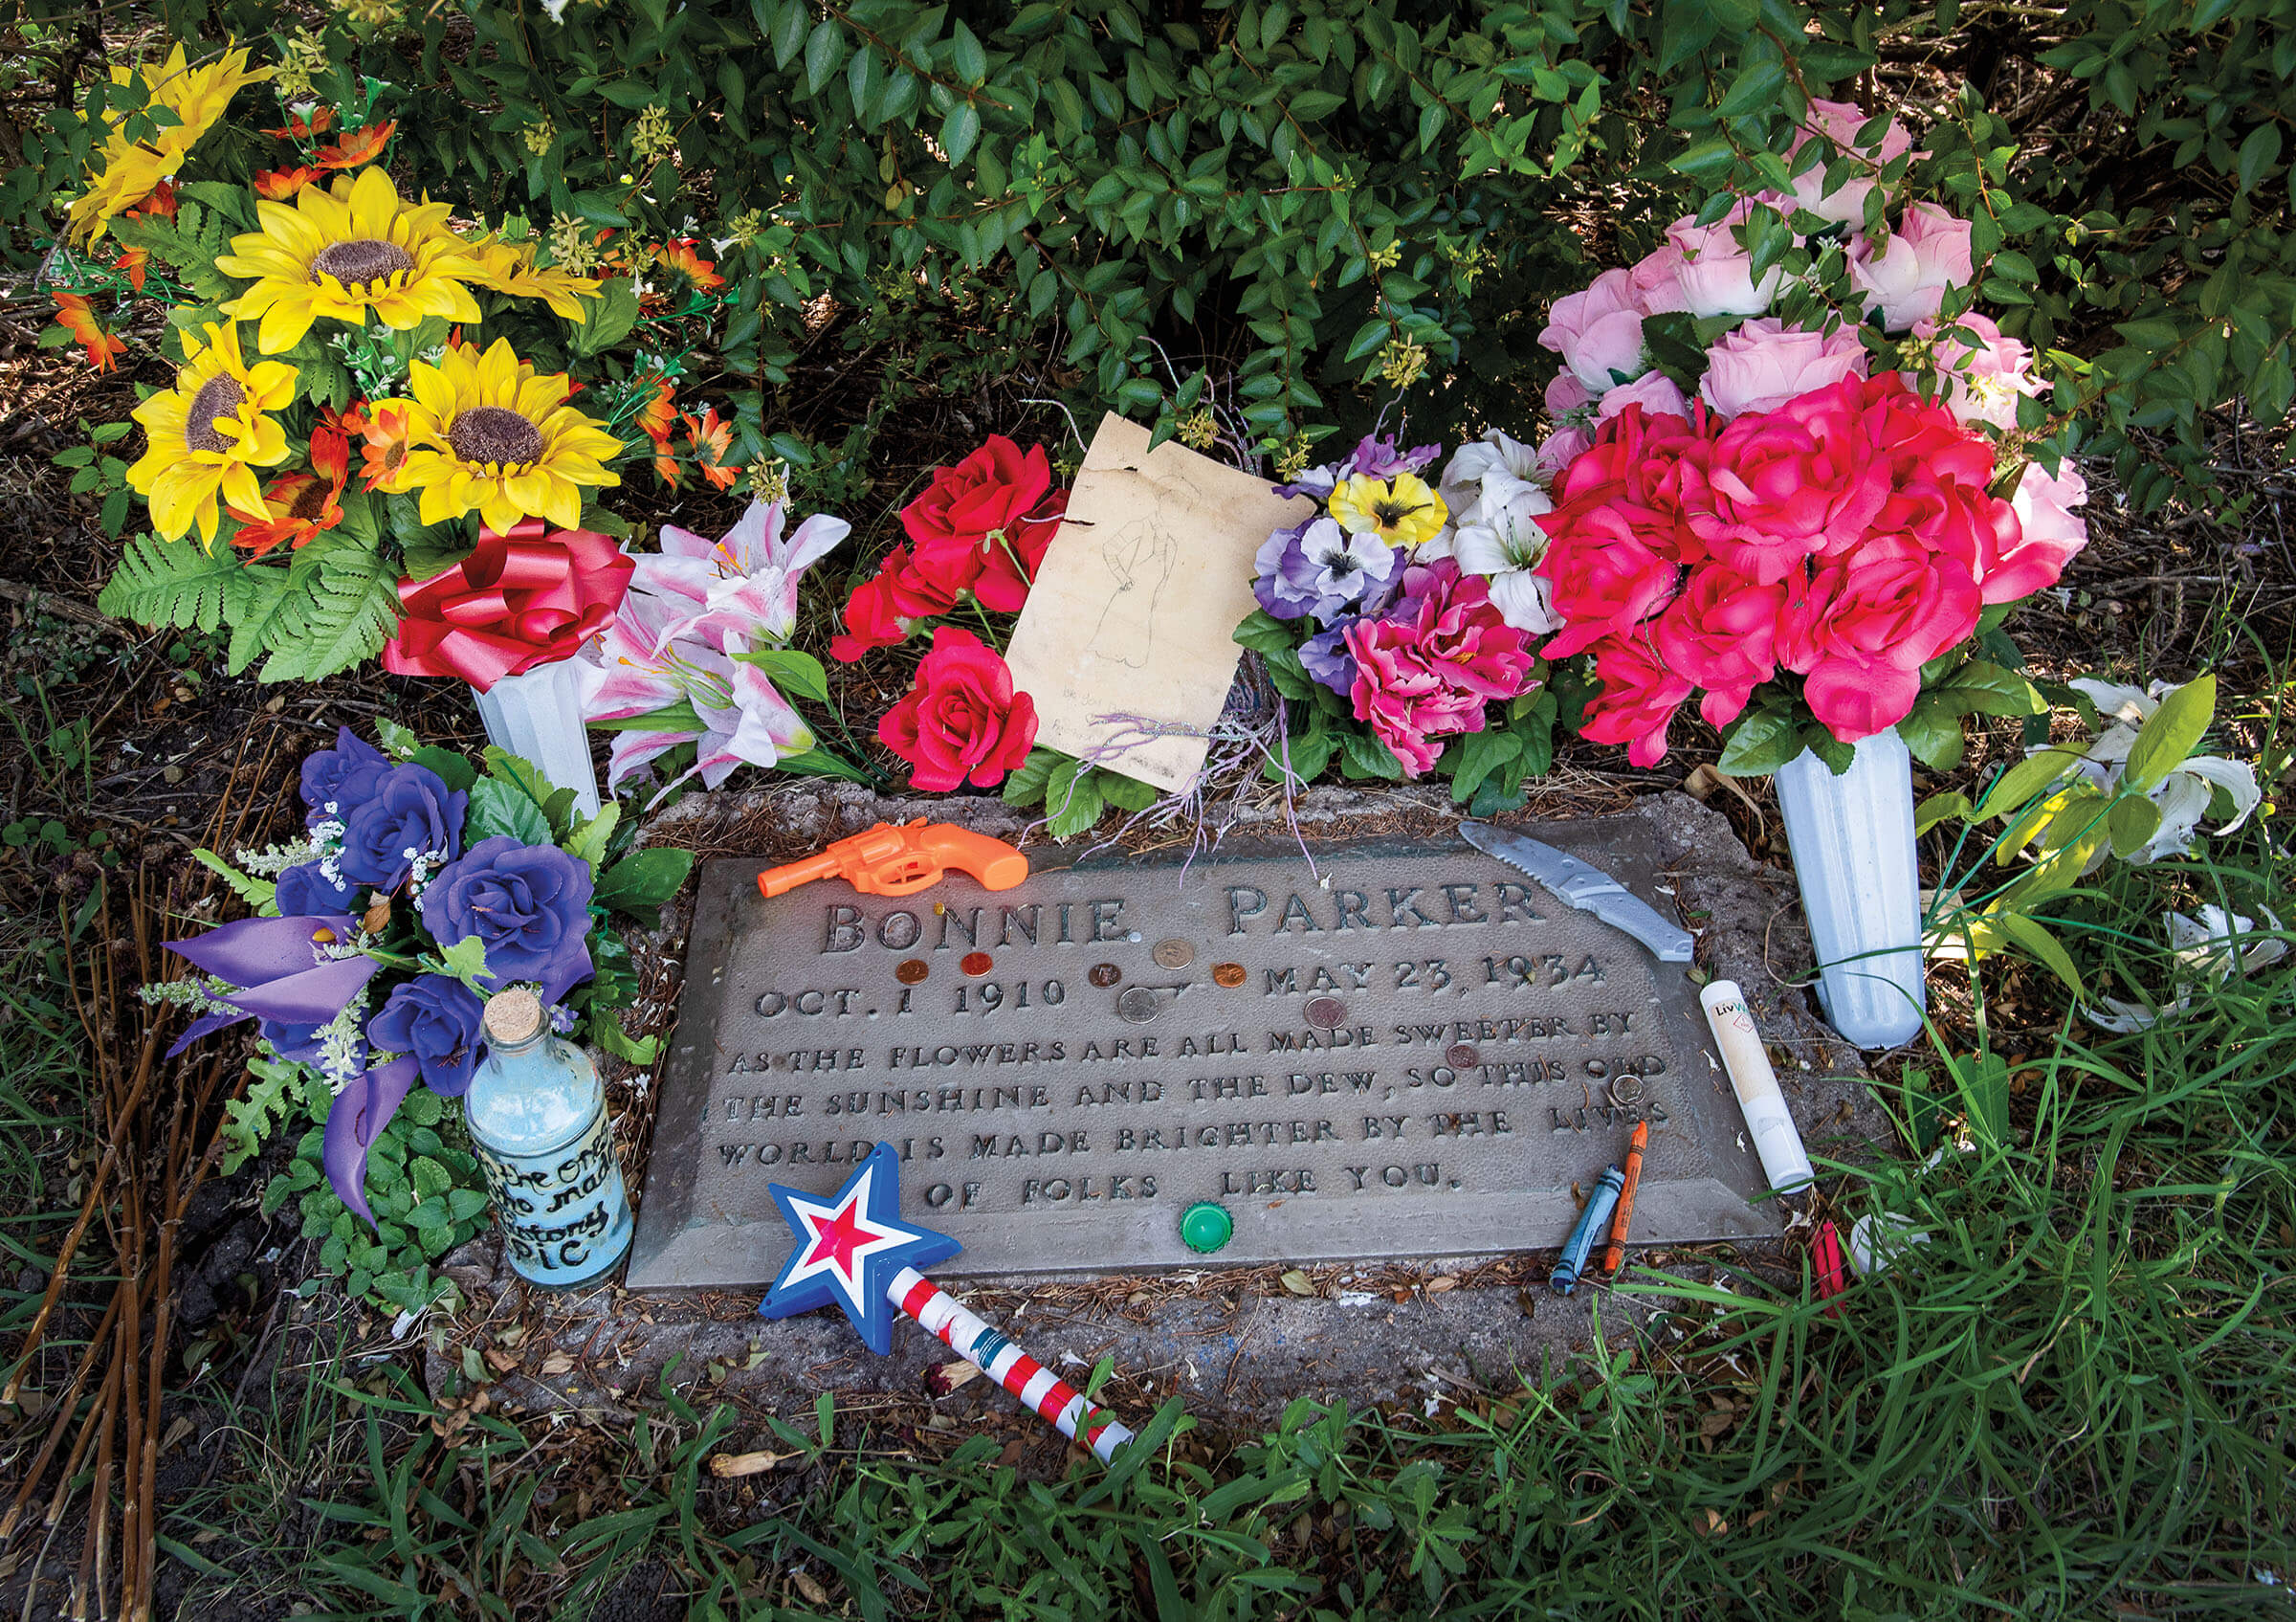 Bonnie Parker's gravestone, adorned with flowers